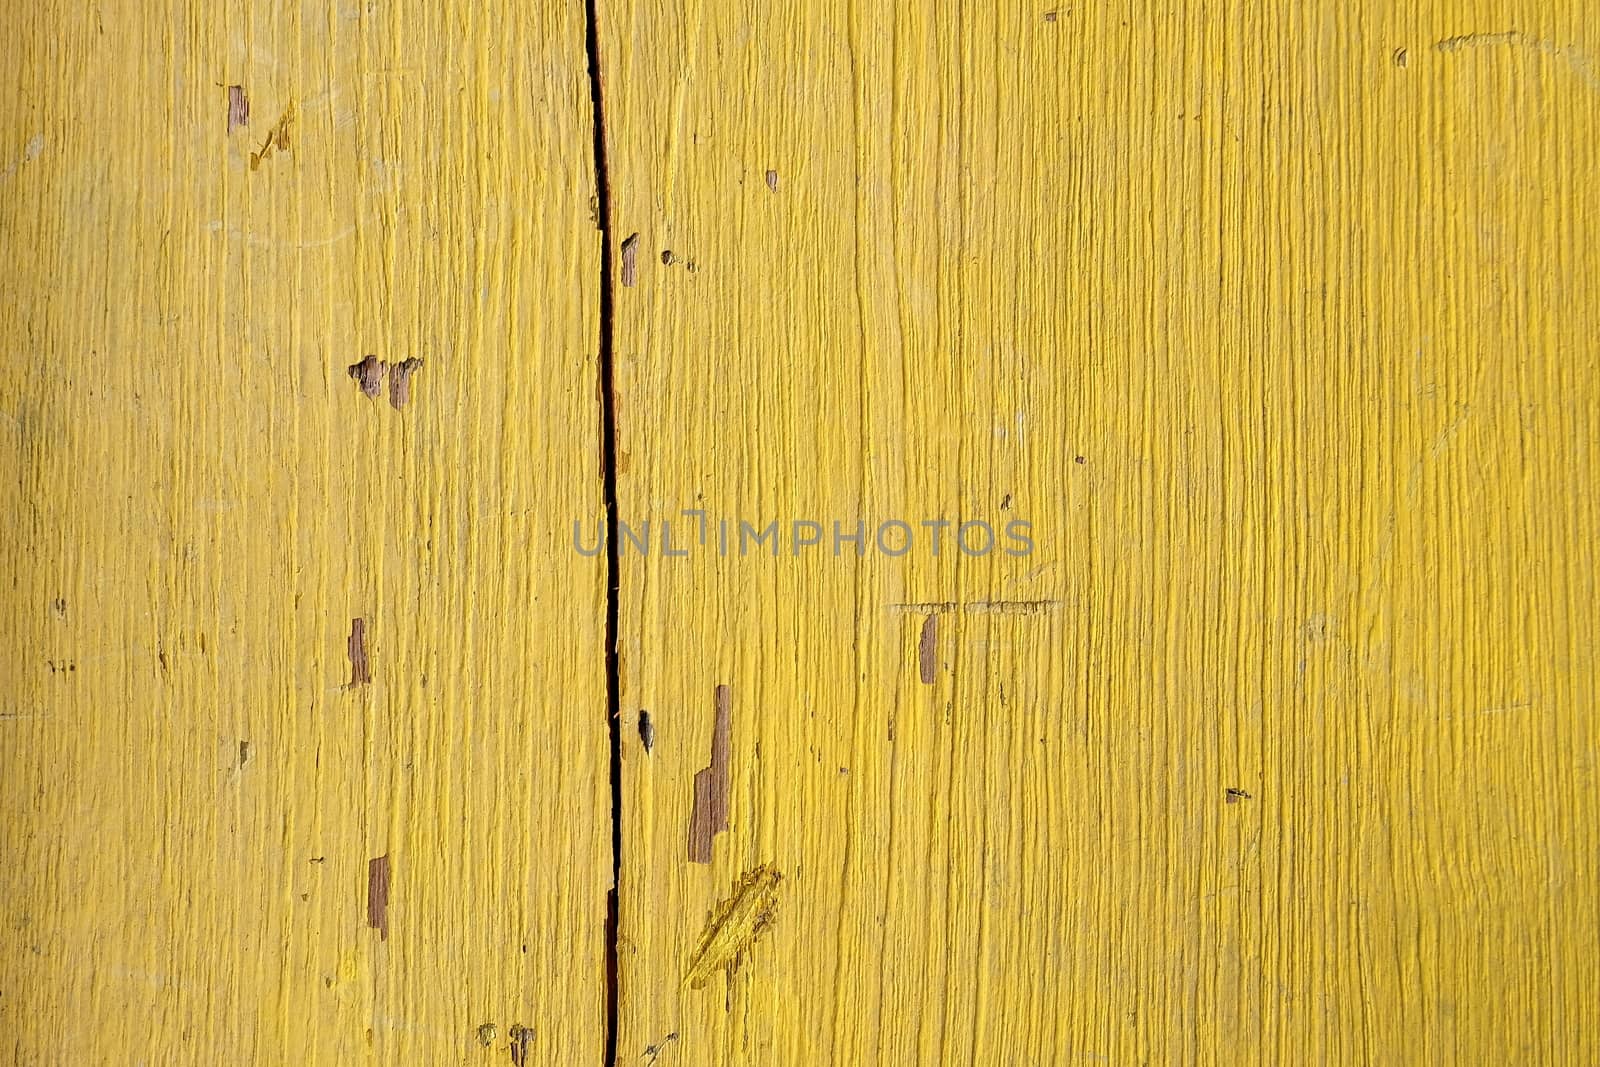 Broken Yellow Paint Wood Board Background.